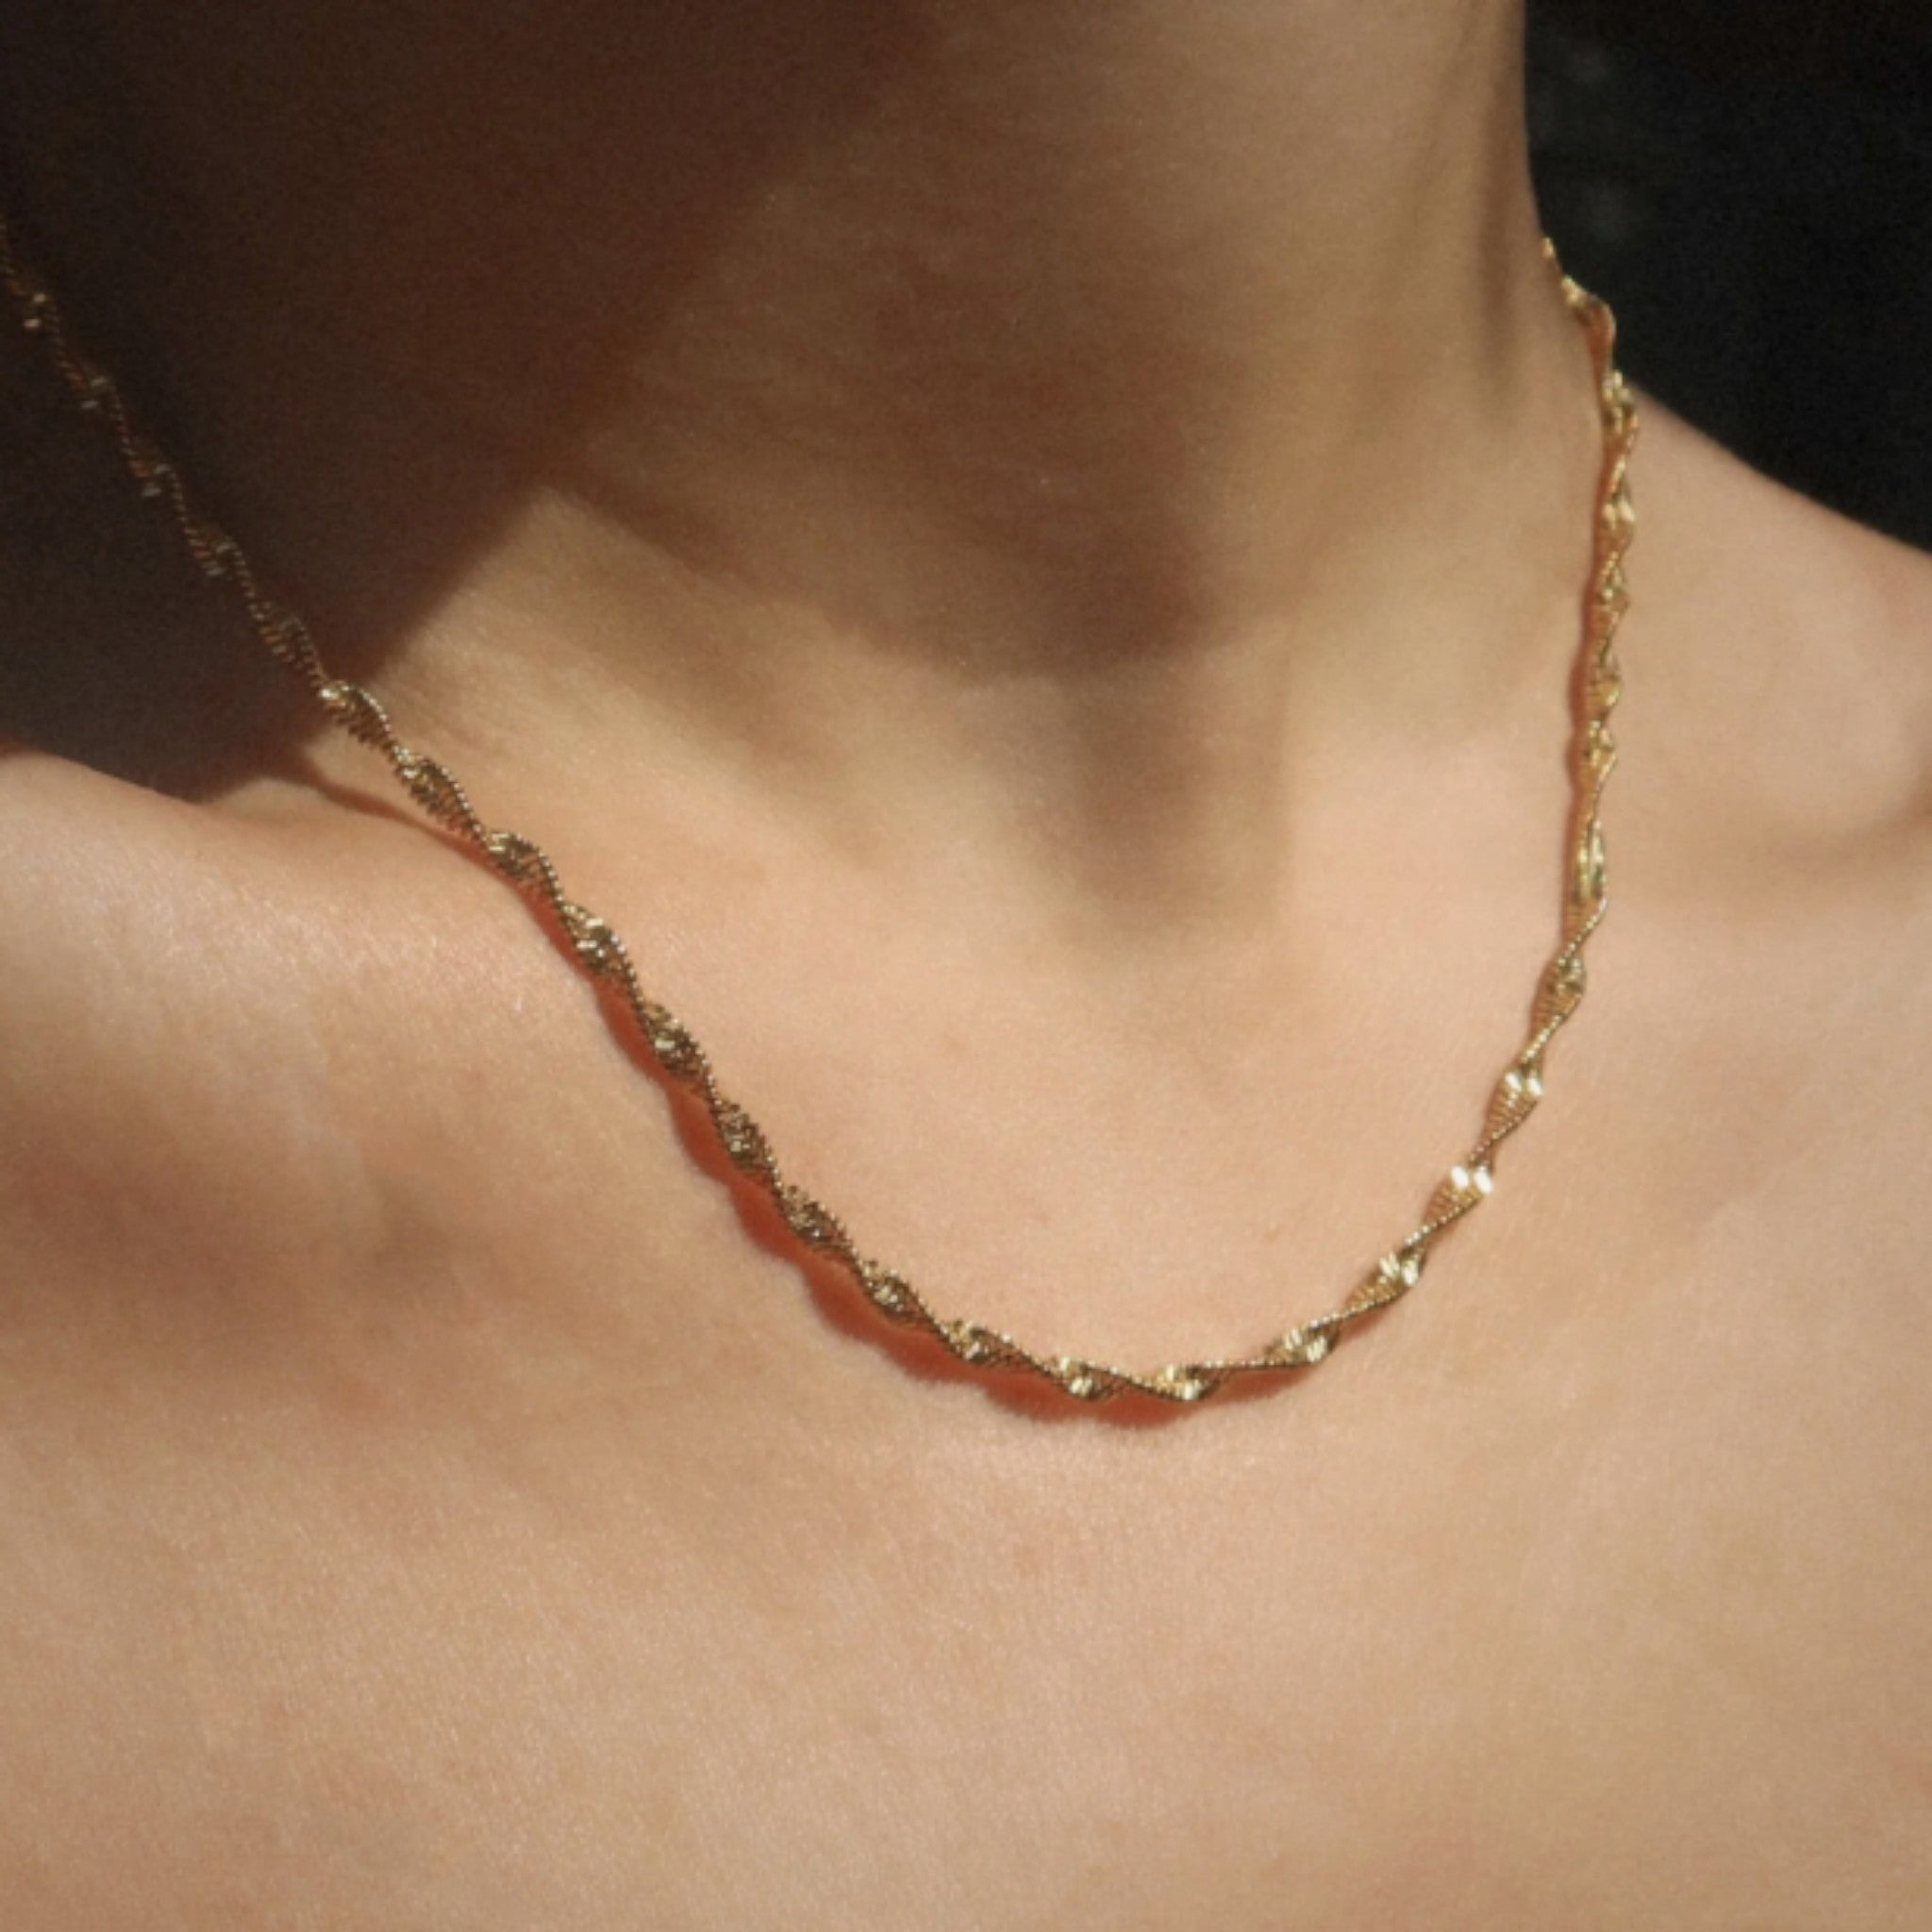 Mod + Jo - Brooke 16" Chain Necklace - Gold Plate